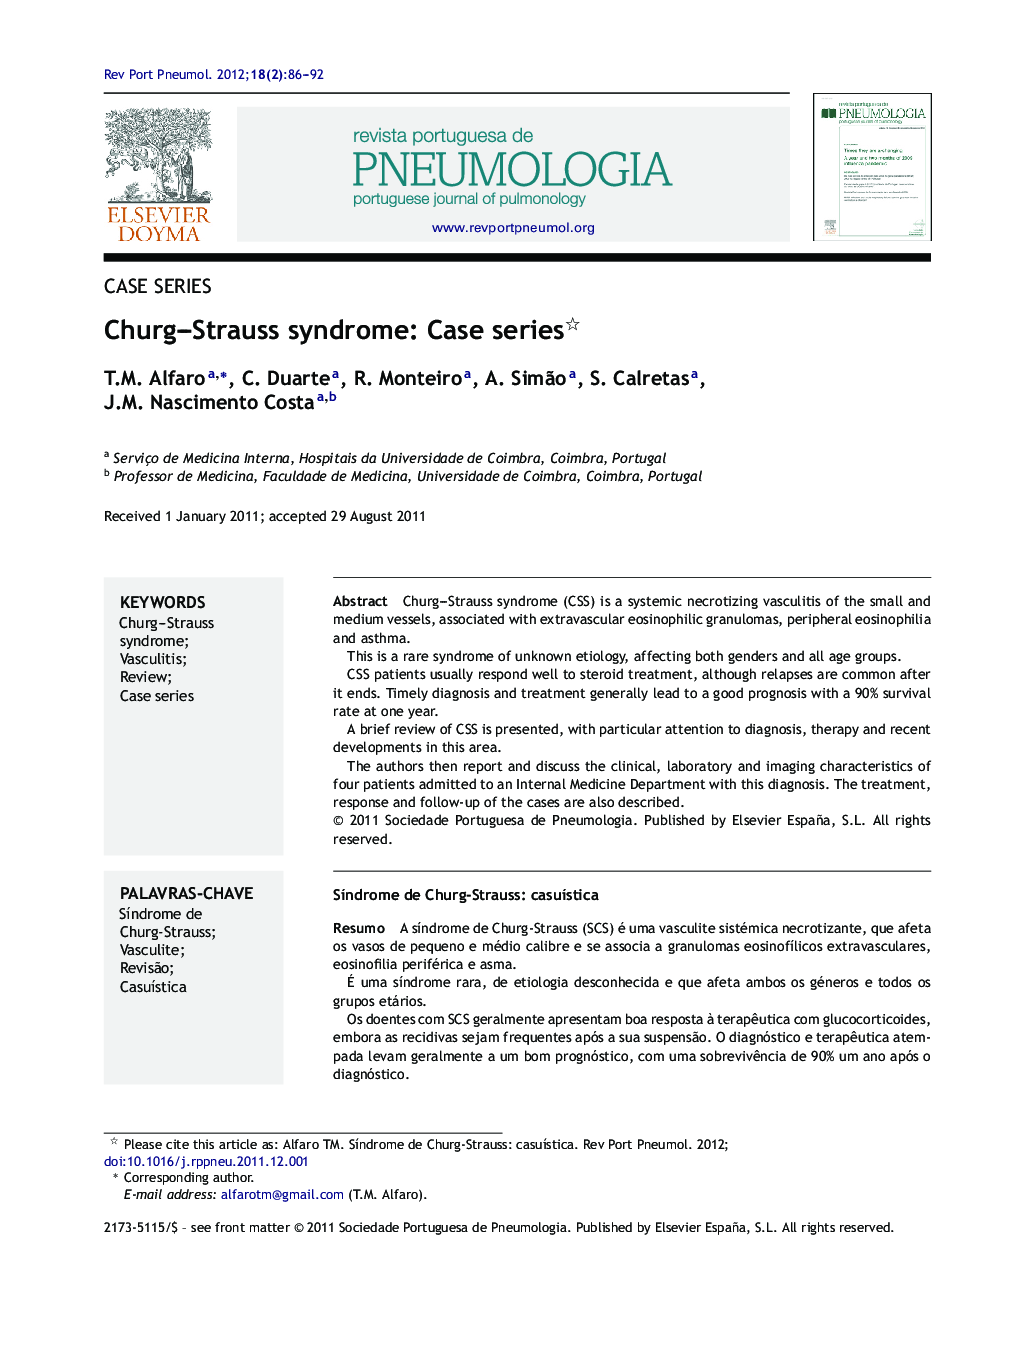 Churg–Strauss syndrome: Case series 